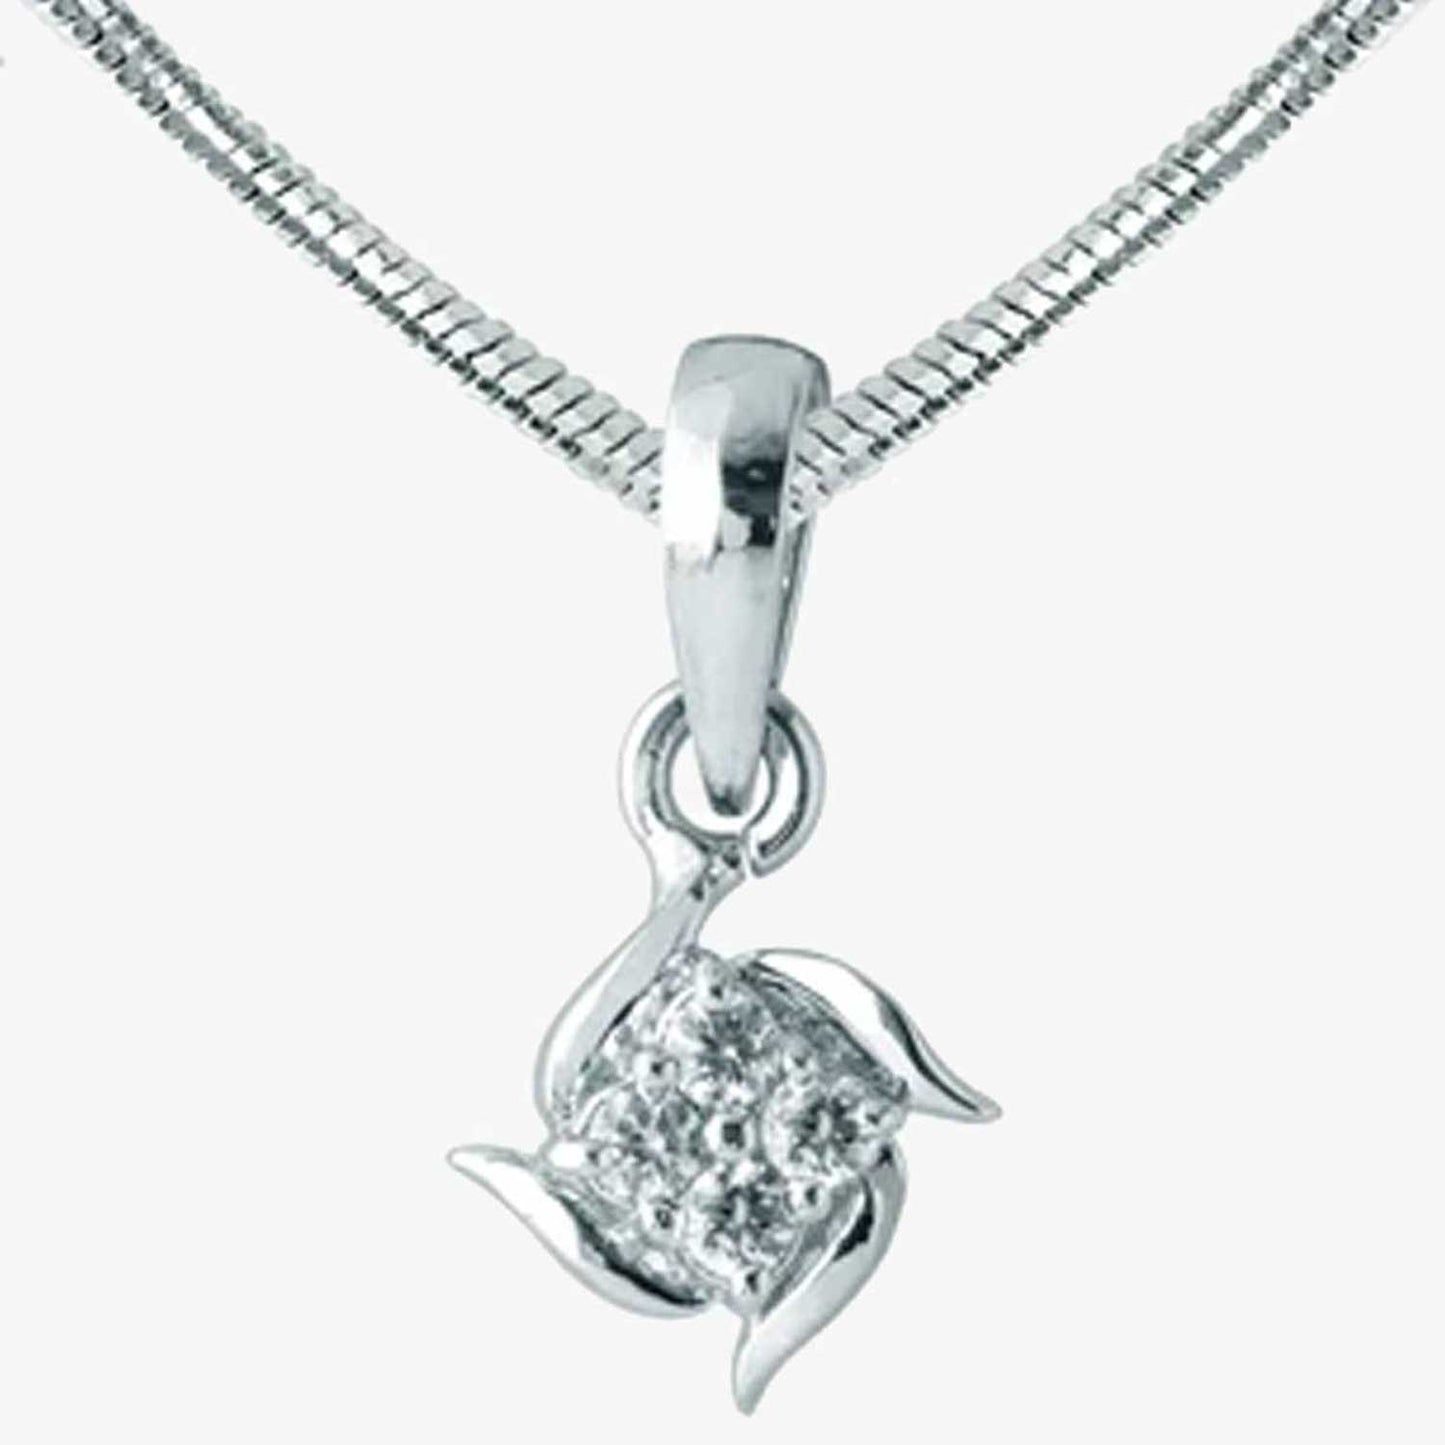 Silver pendant for women